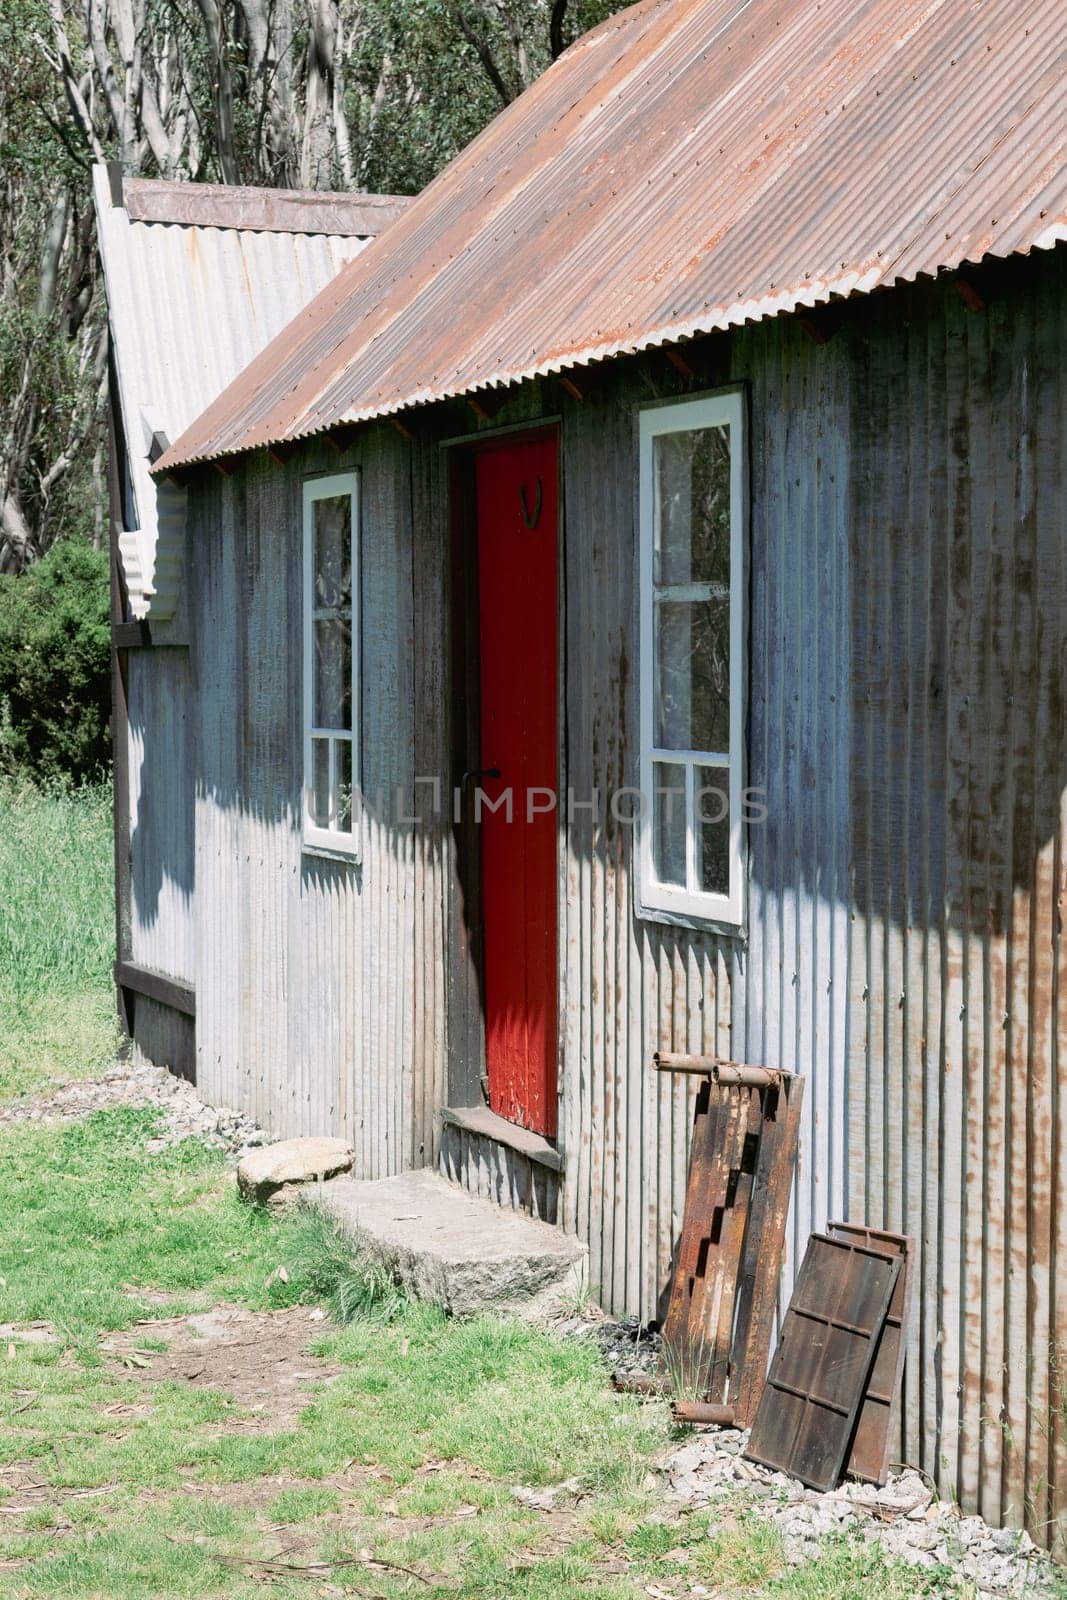 Horse Camp Hut in Kosciuszko National Park in Australia by FiledIMAGE